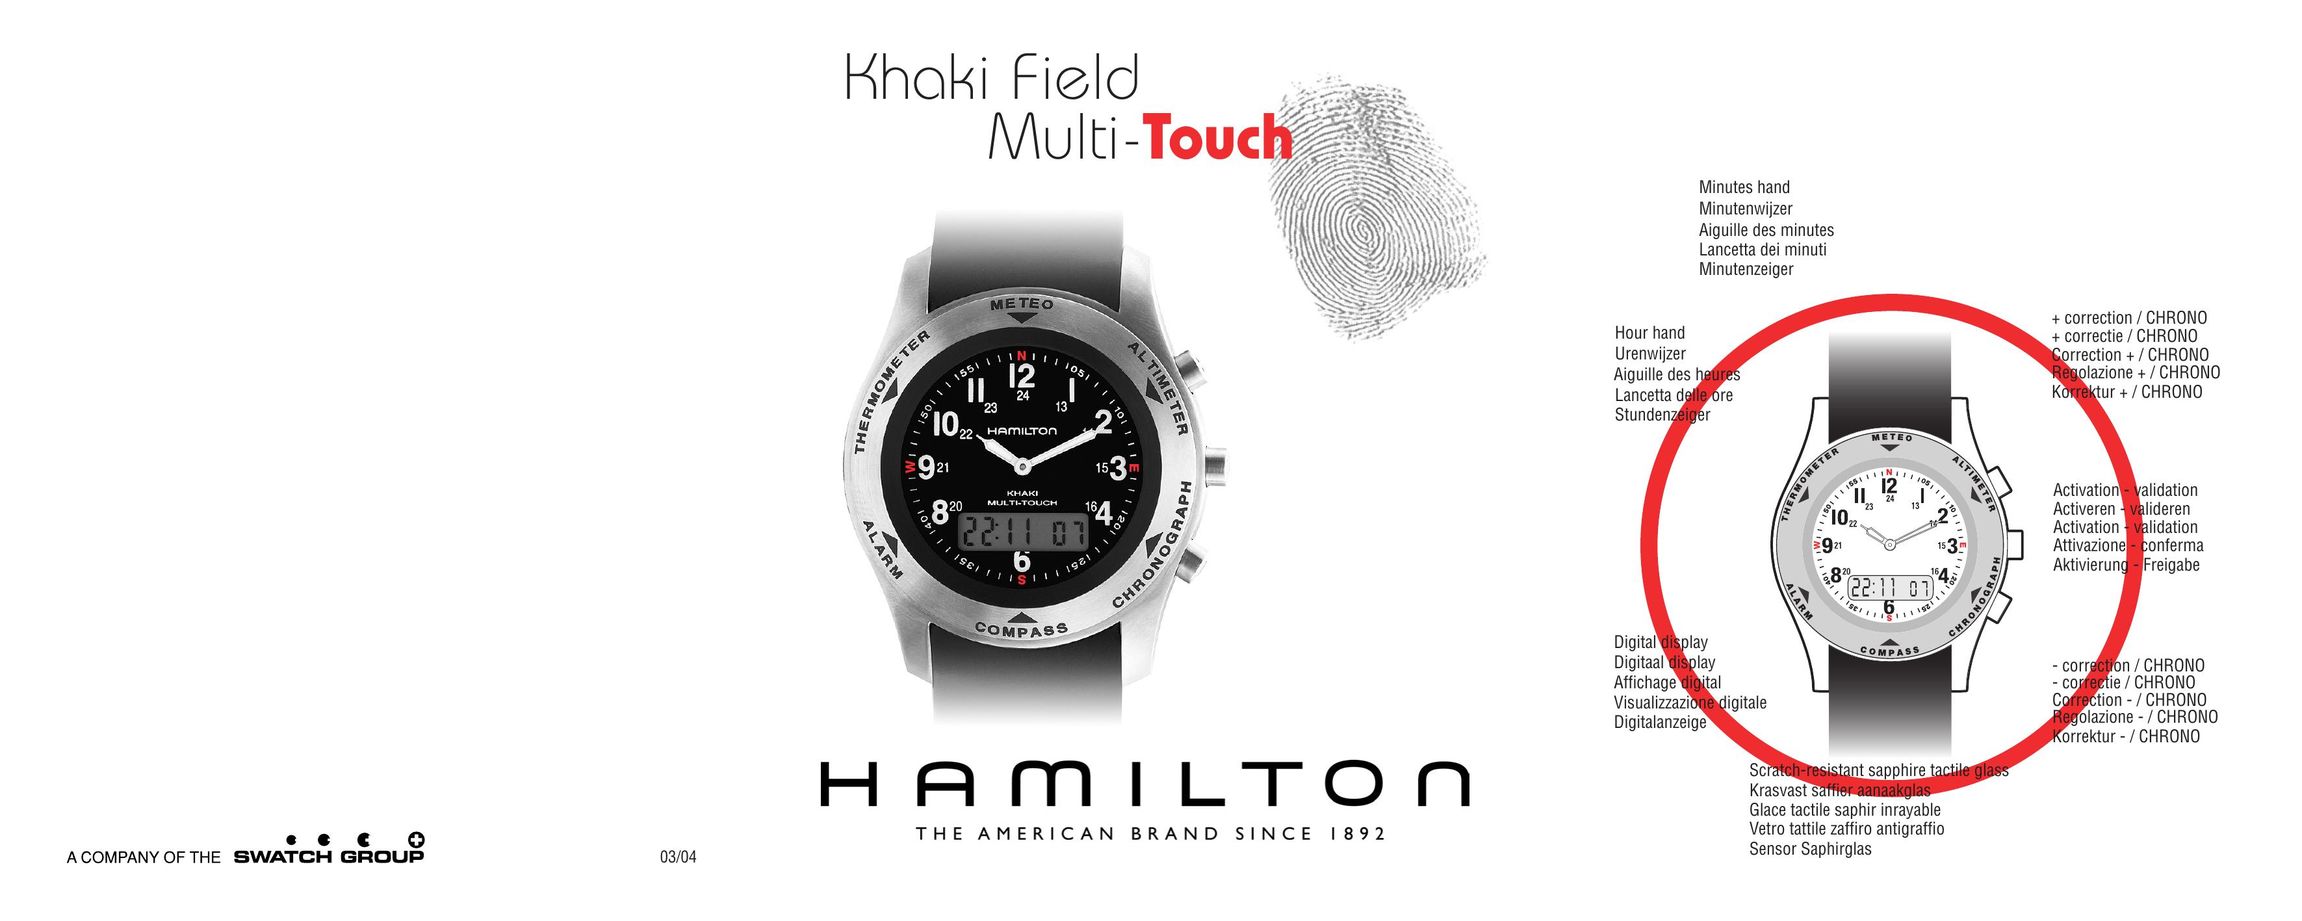 Hamilton Watch Khaki Field Multi-Touch Watch User Manual